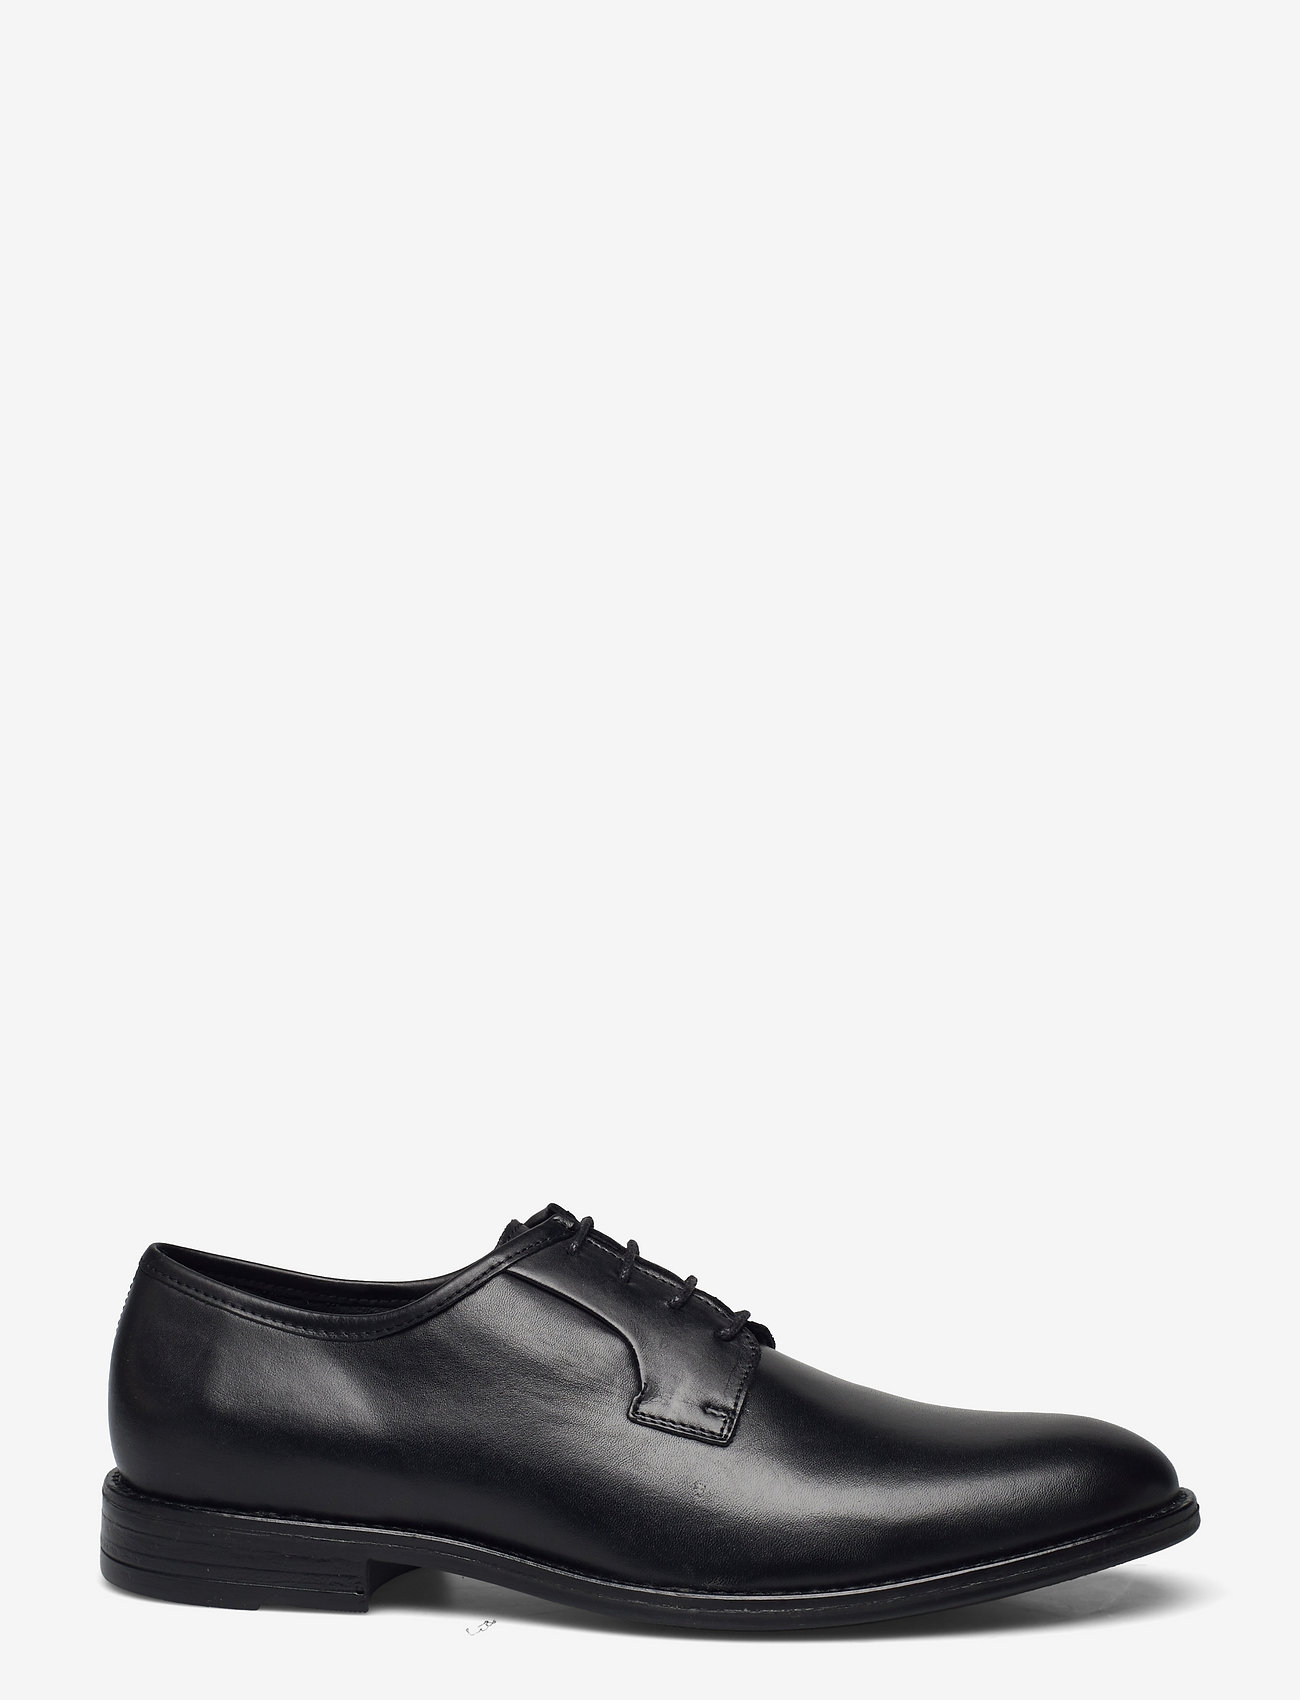 Playboy Footwear - PFRBEN - nauhakengät - black leather - 1